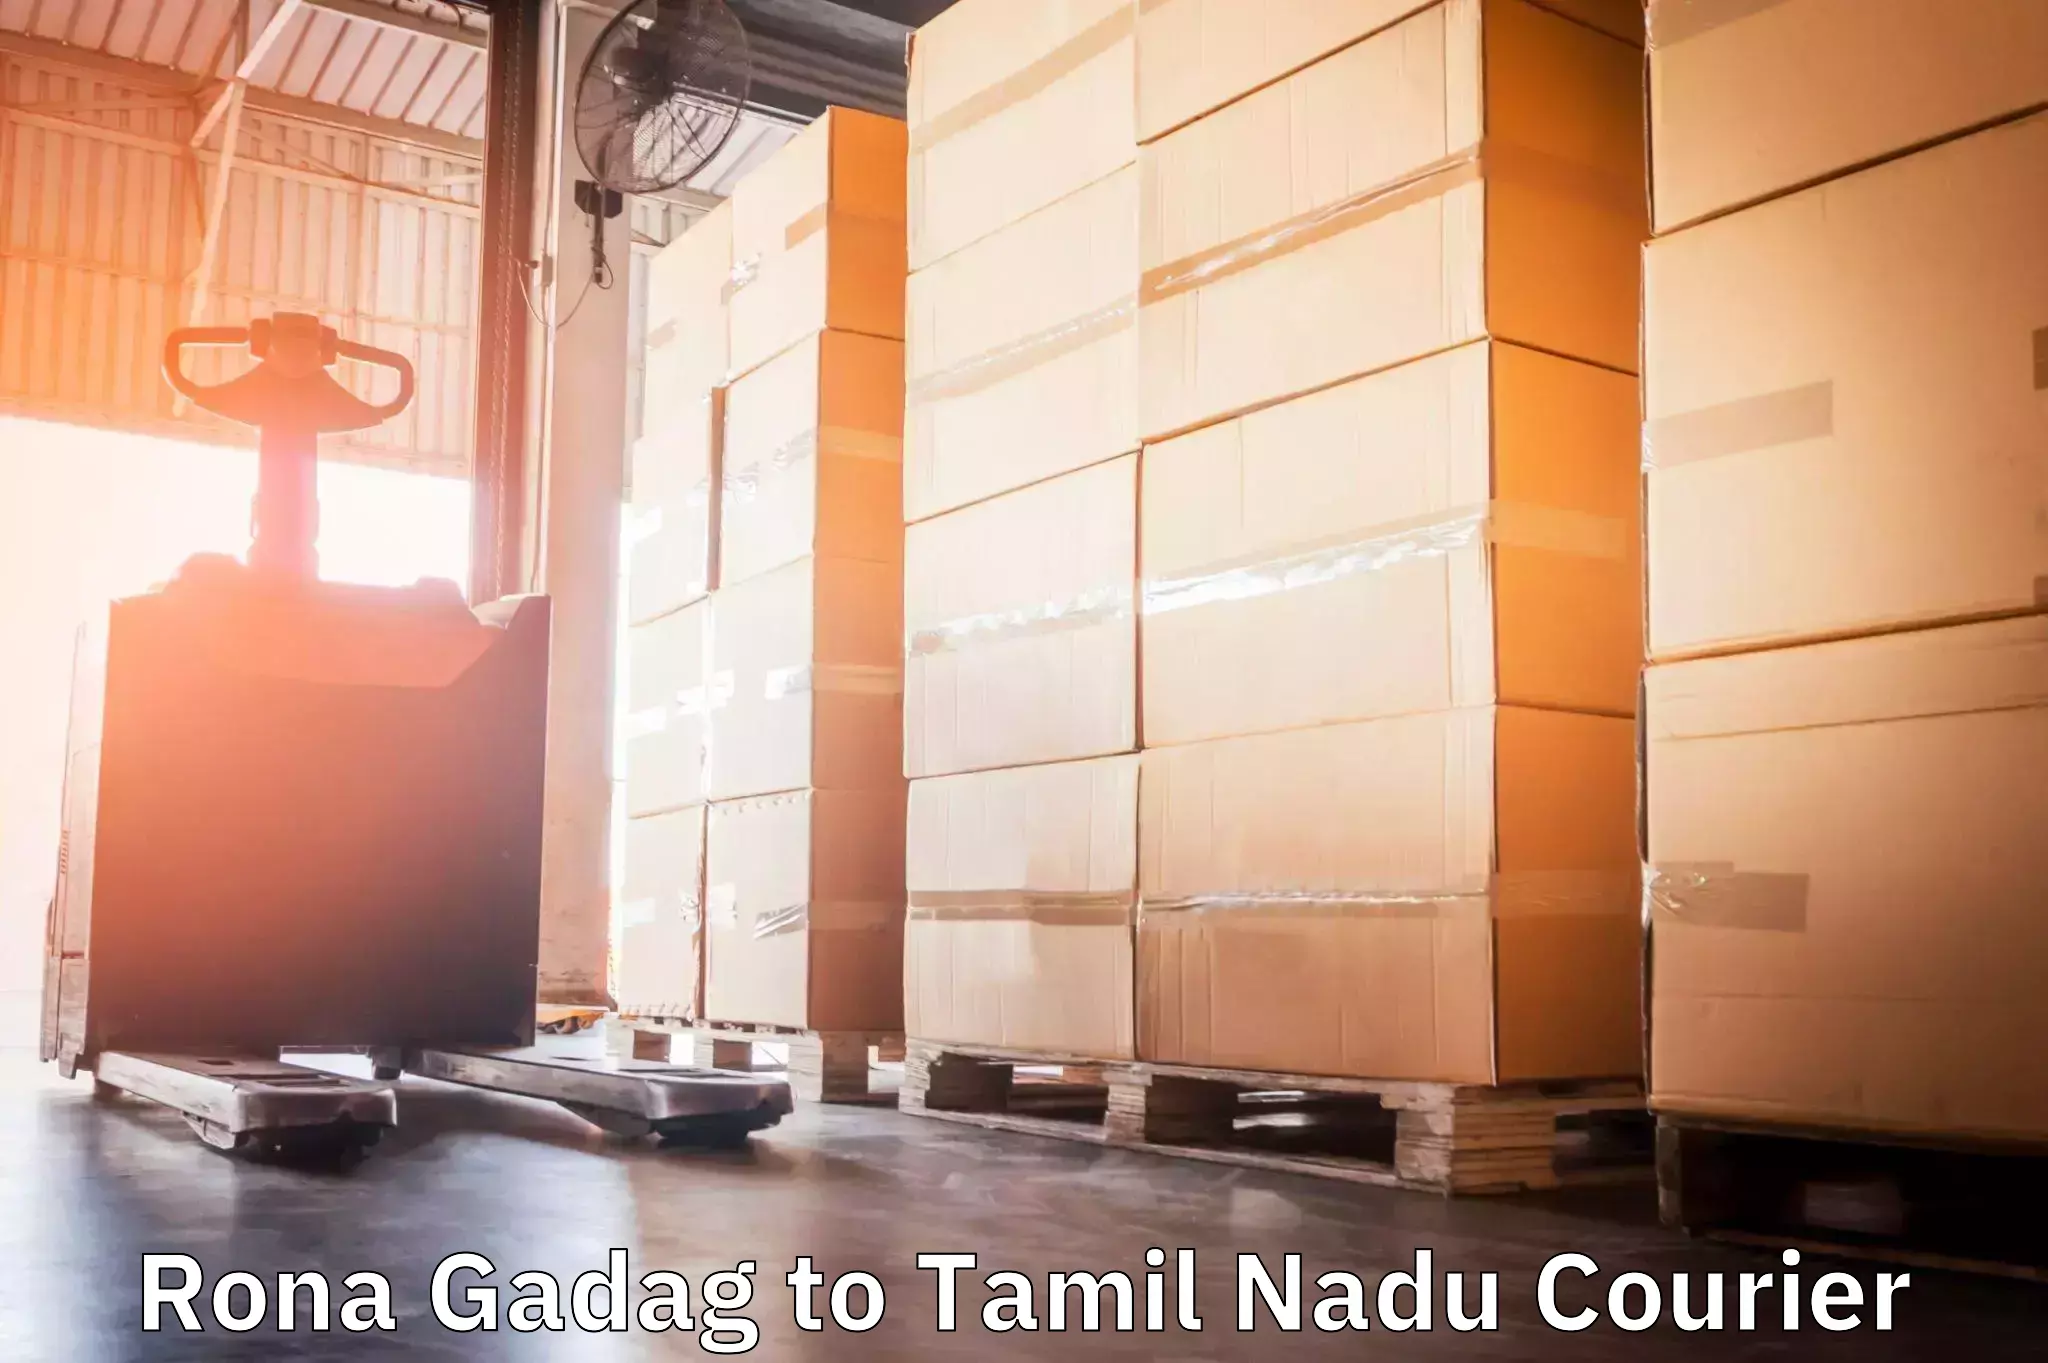 Shipping and handling Rona Gadag to Tamil Nadu